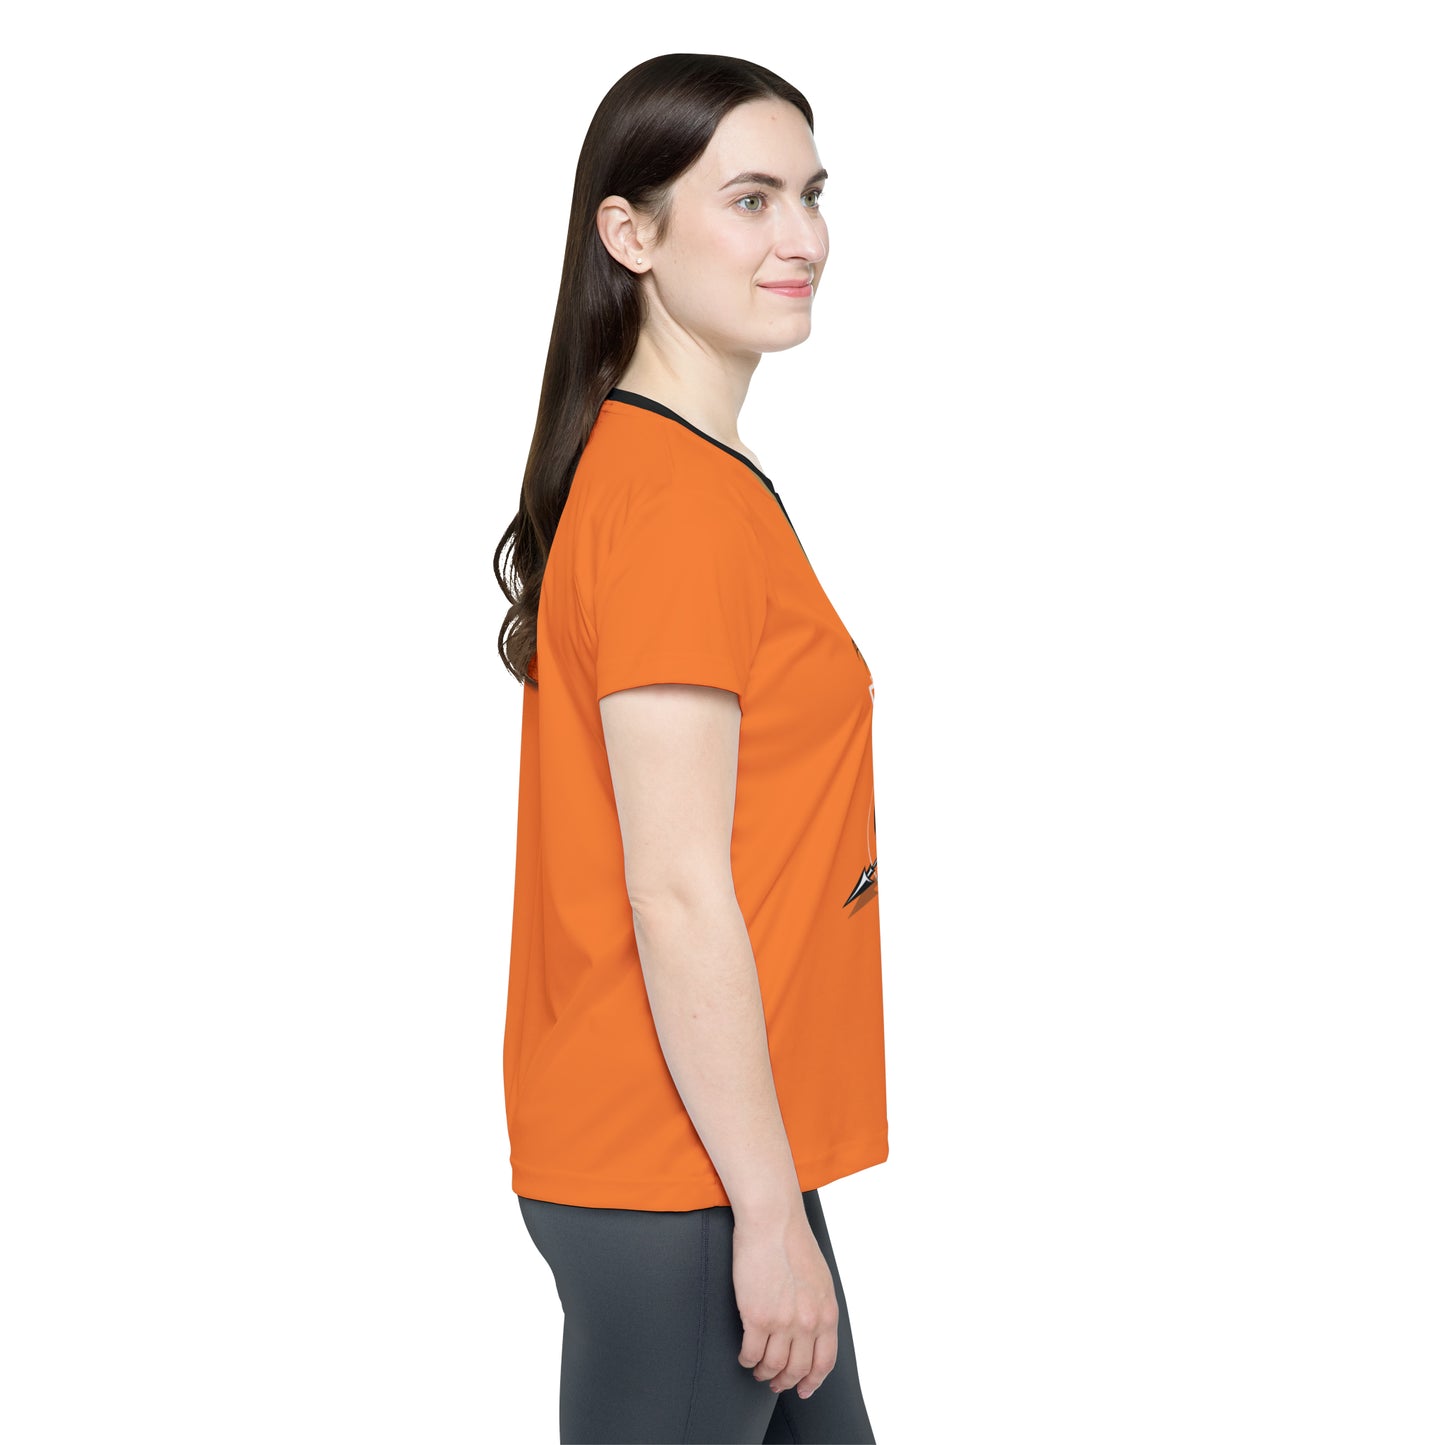 Viper Women's Performance T-shirt Orange Edition